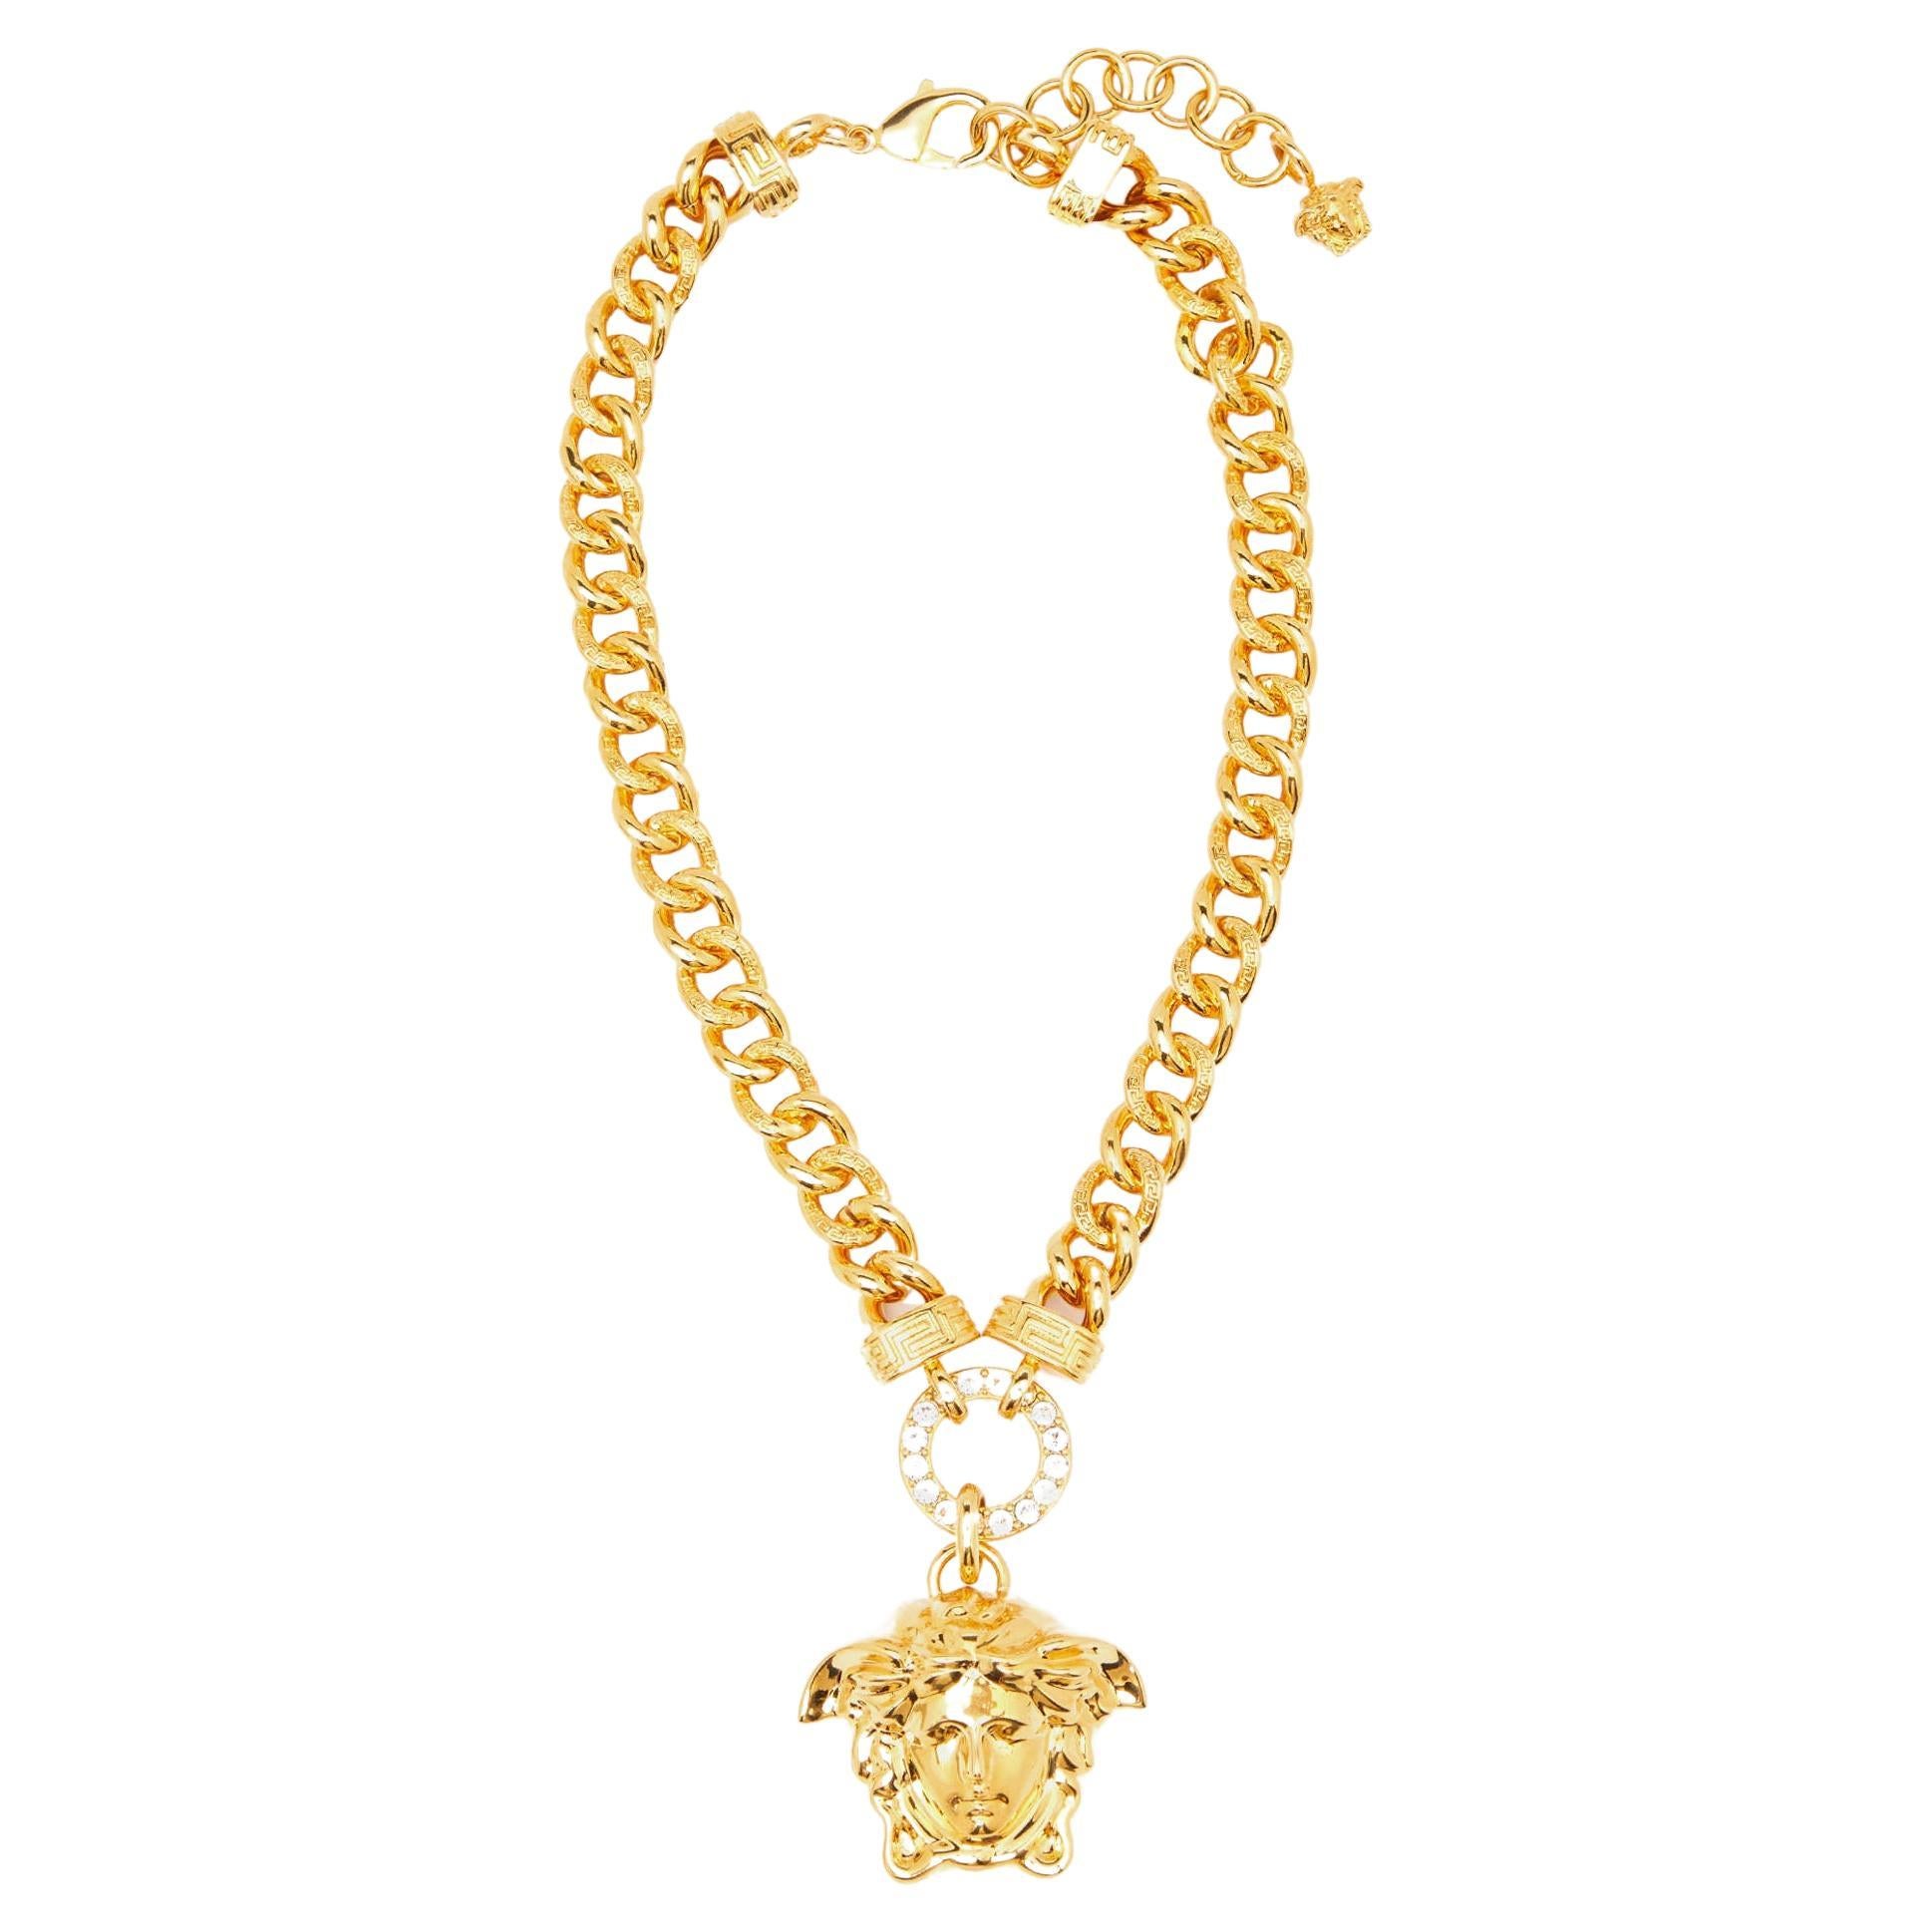 Versace Medusa Crystal Gold Tone Necklace